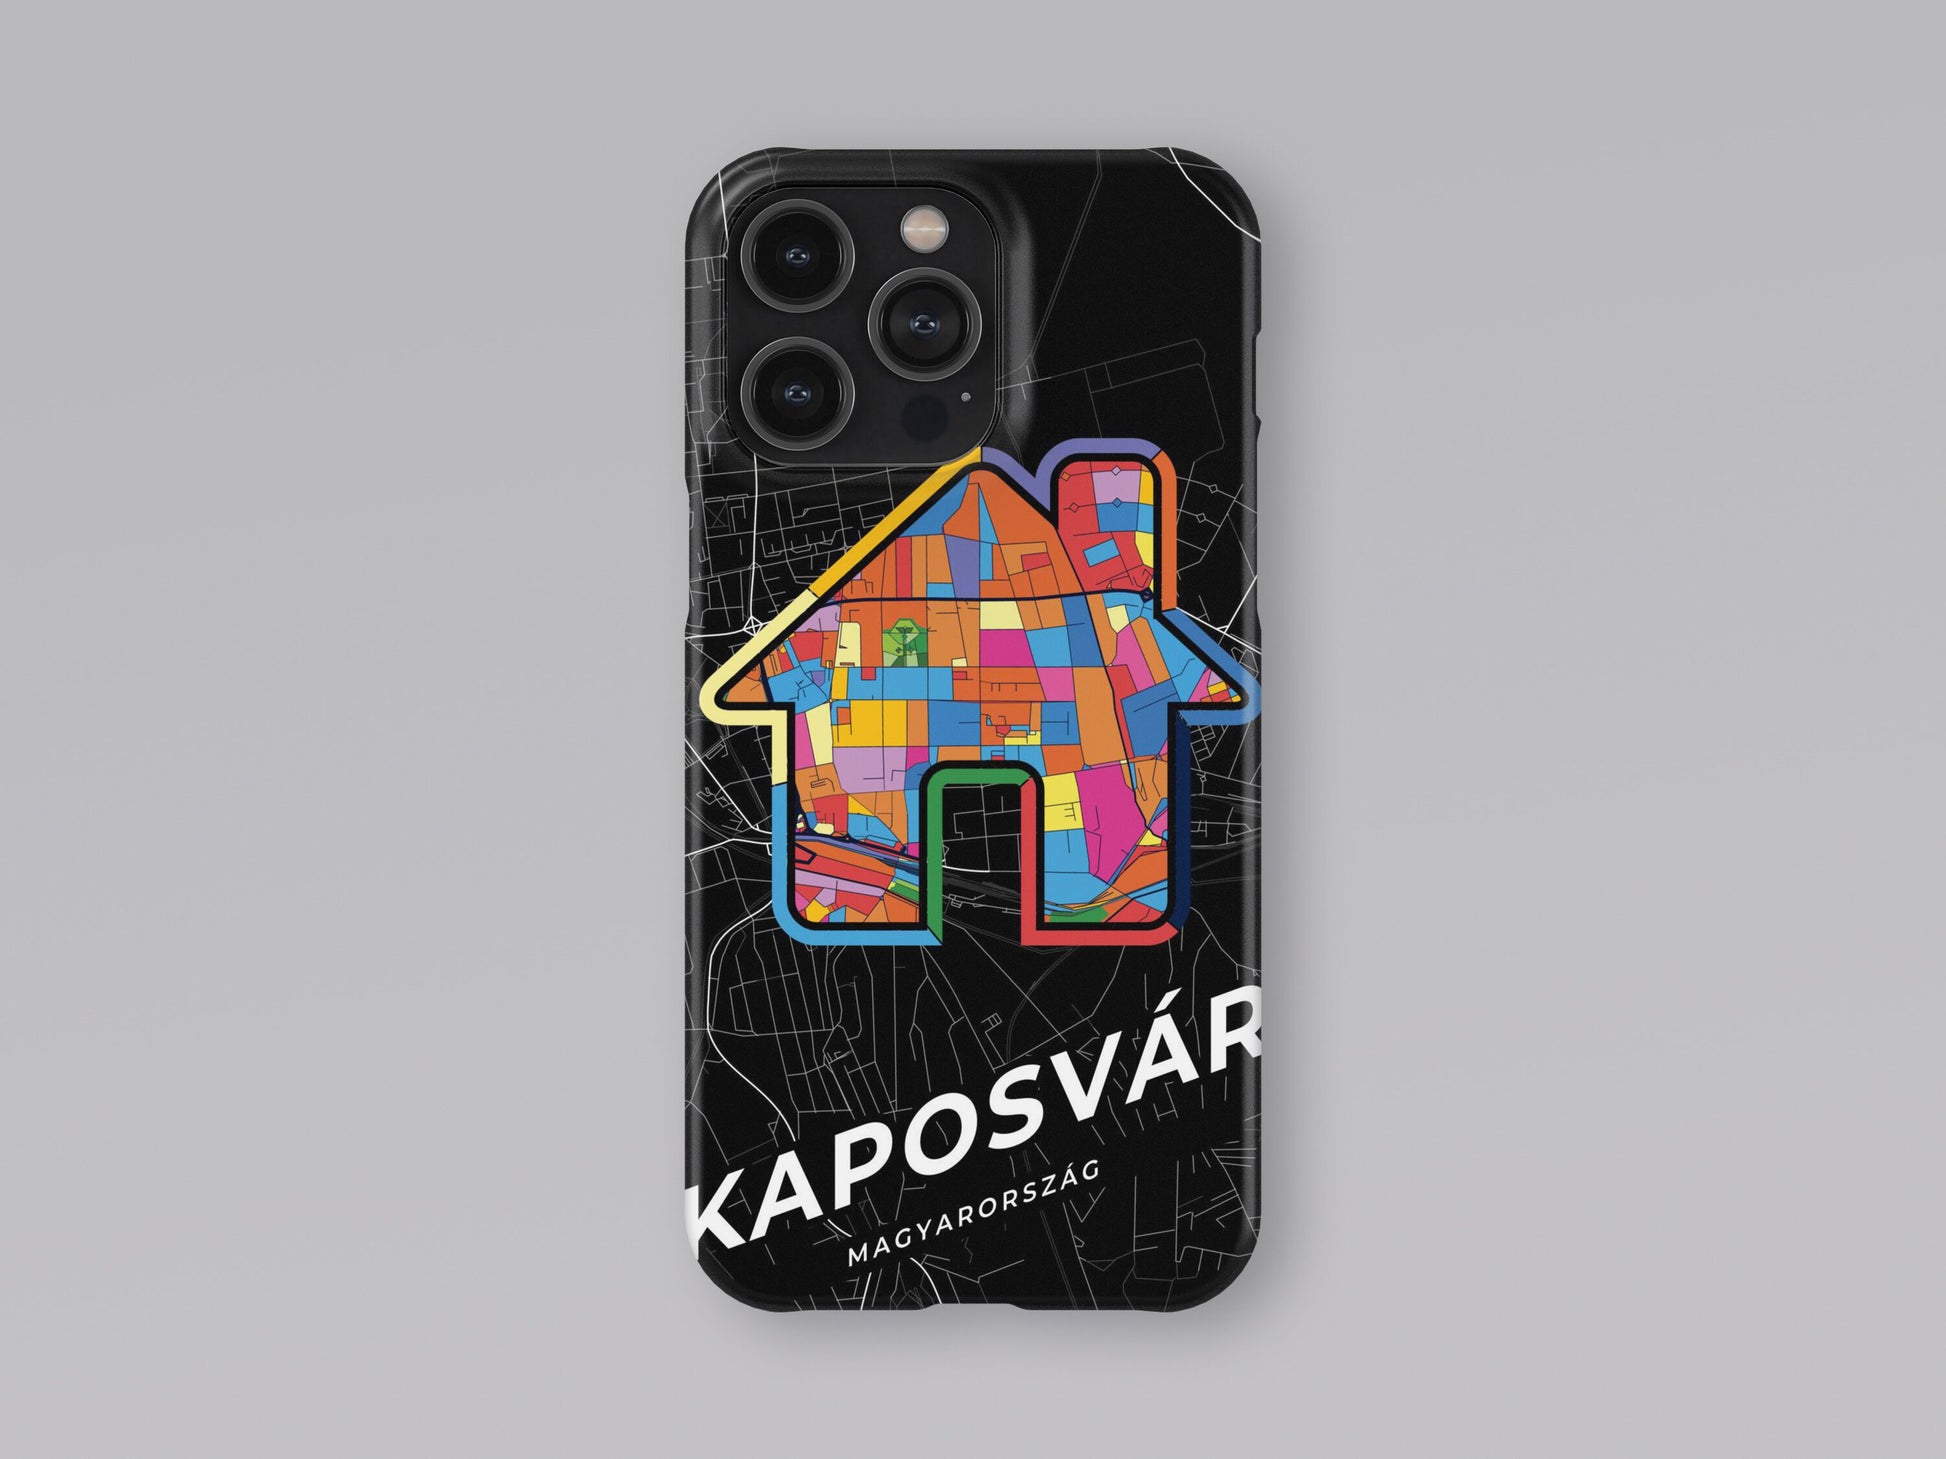 Kaposvár Hungary slim phone case with colorful icon. Birthday, wedding or housewarming gift. Couple match cases. 3